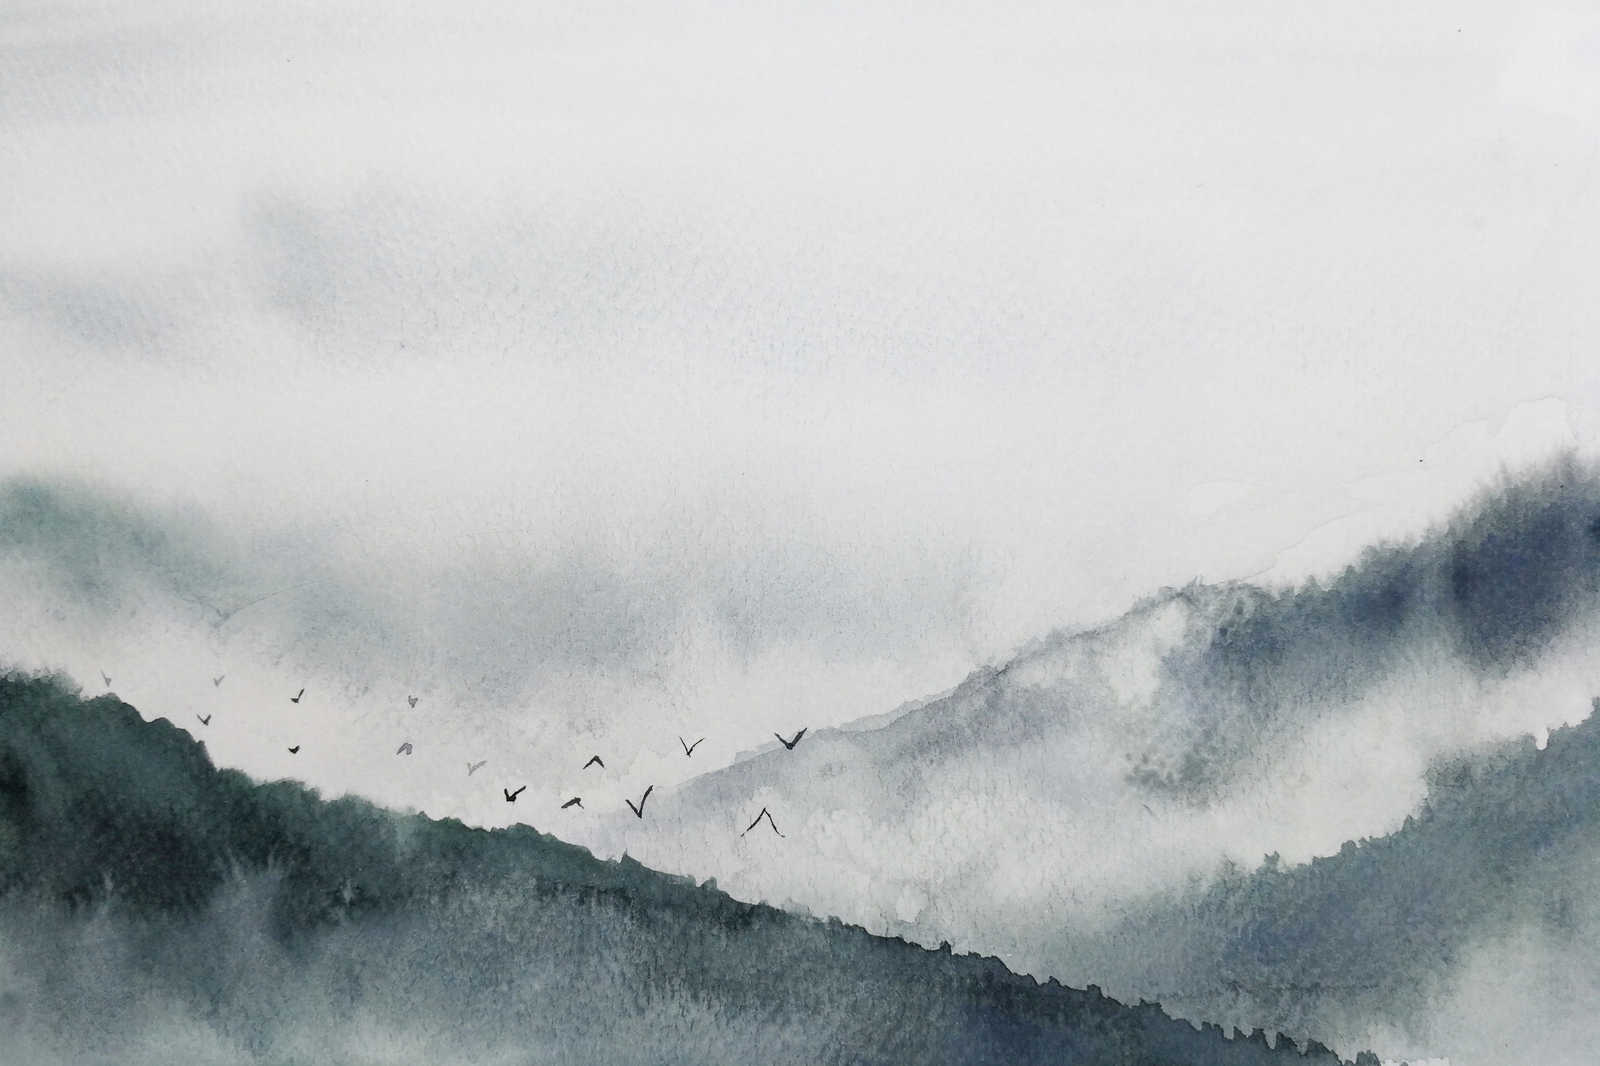             Lienzo con paisaje de niebla en estilo pictórico | gris, negro - 0,90 m x 0,60 m
        